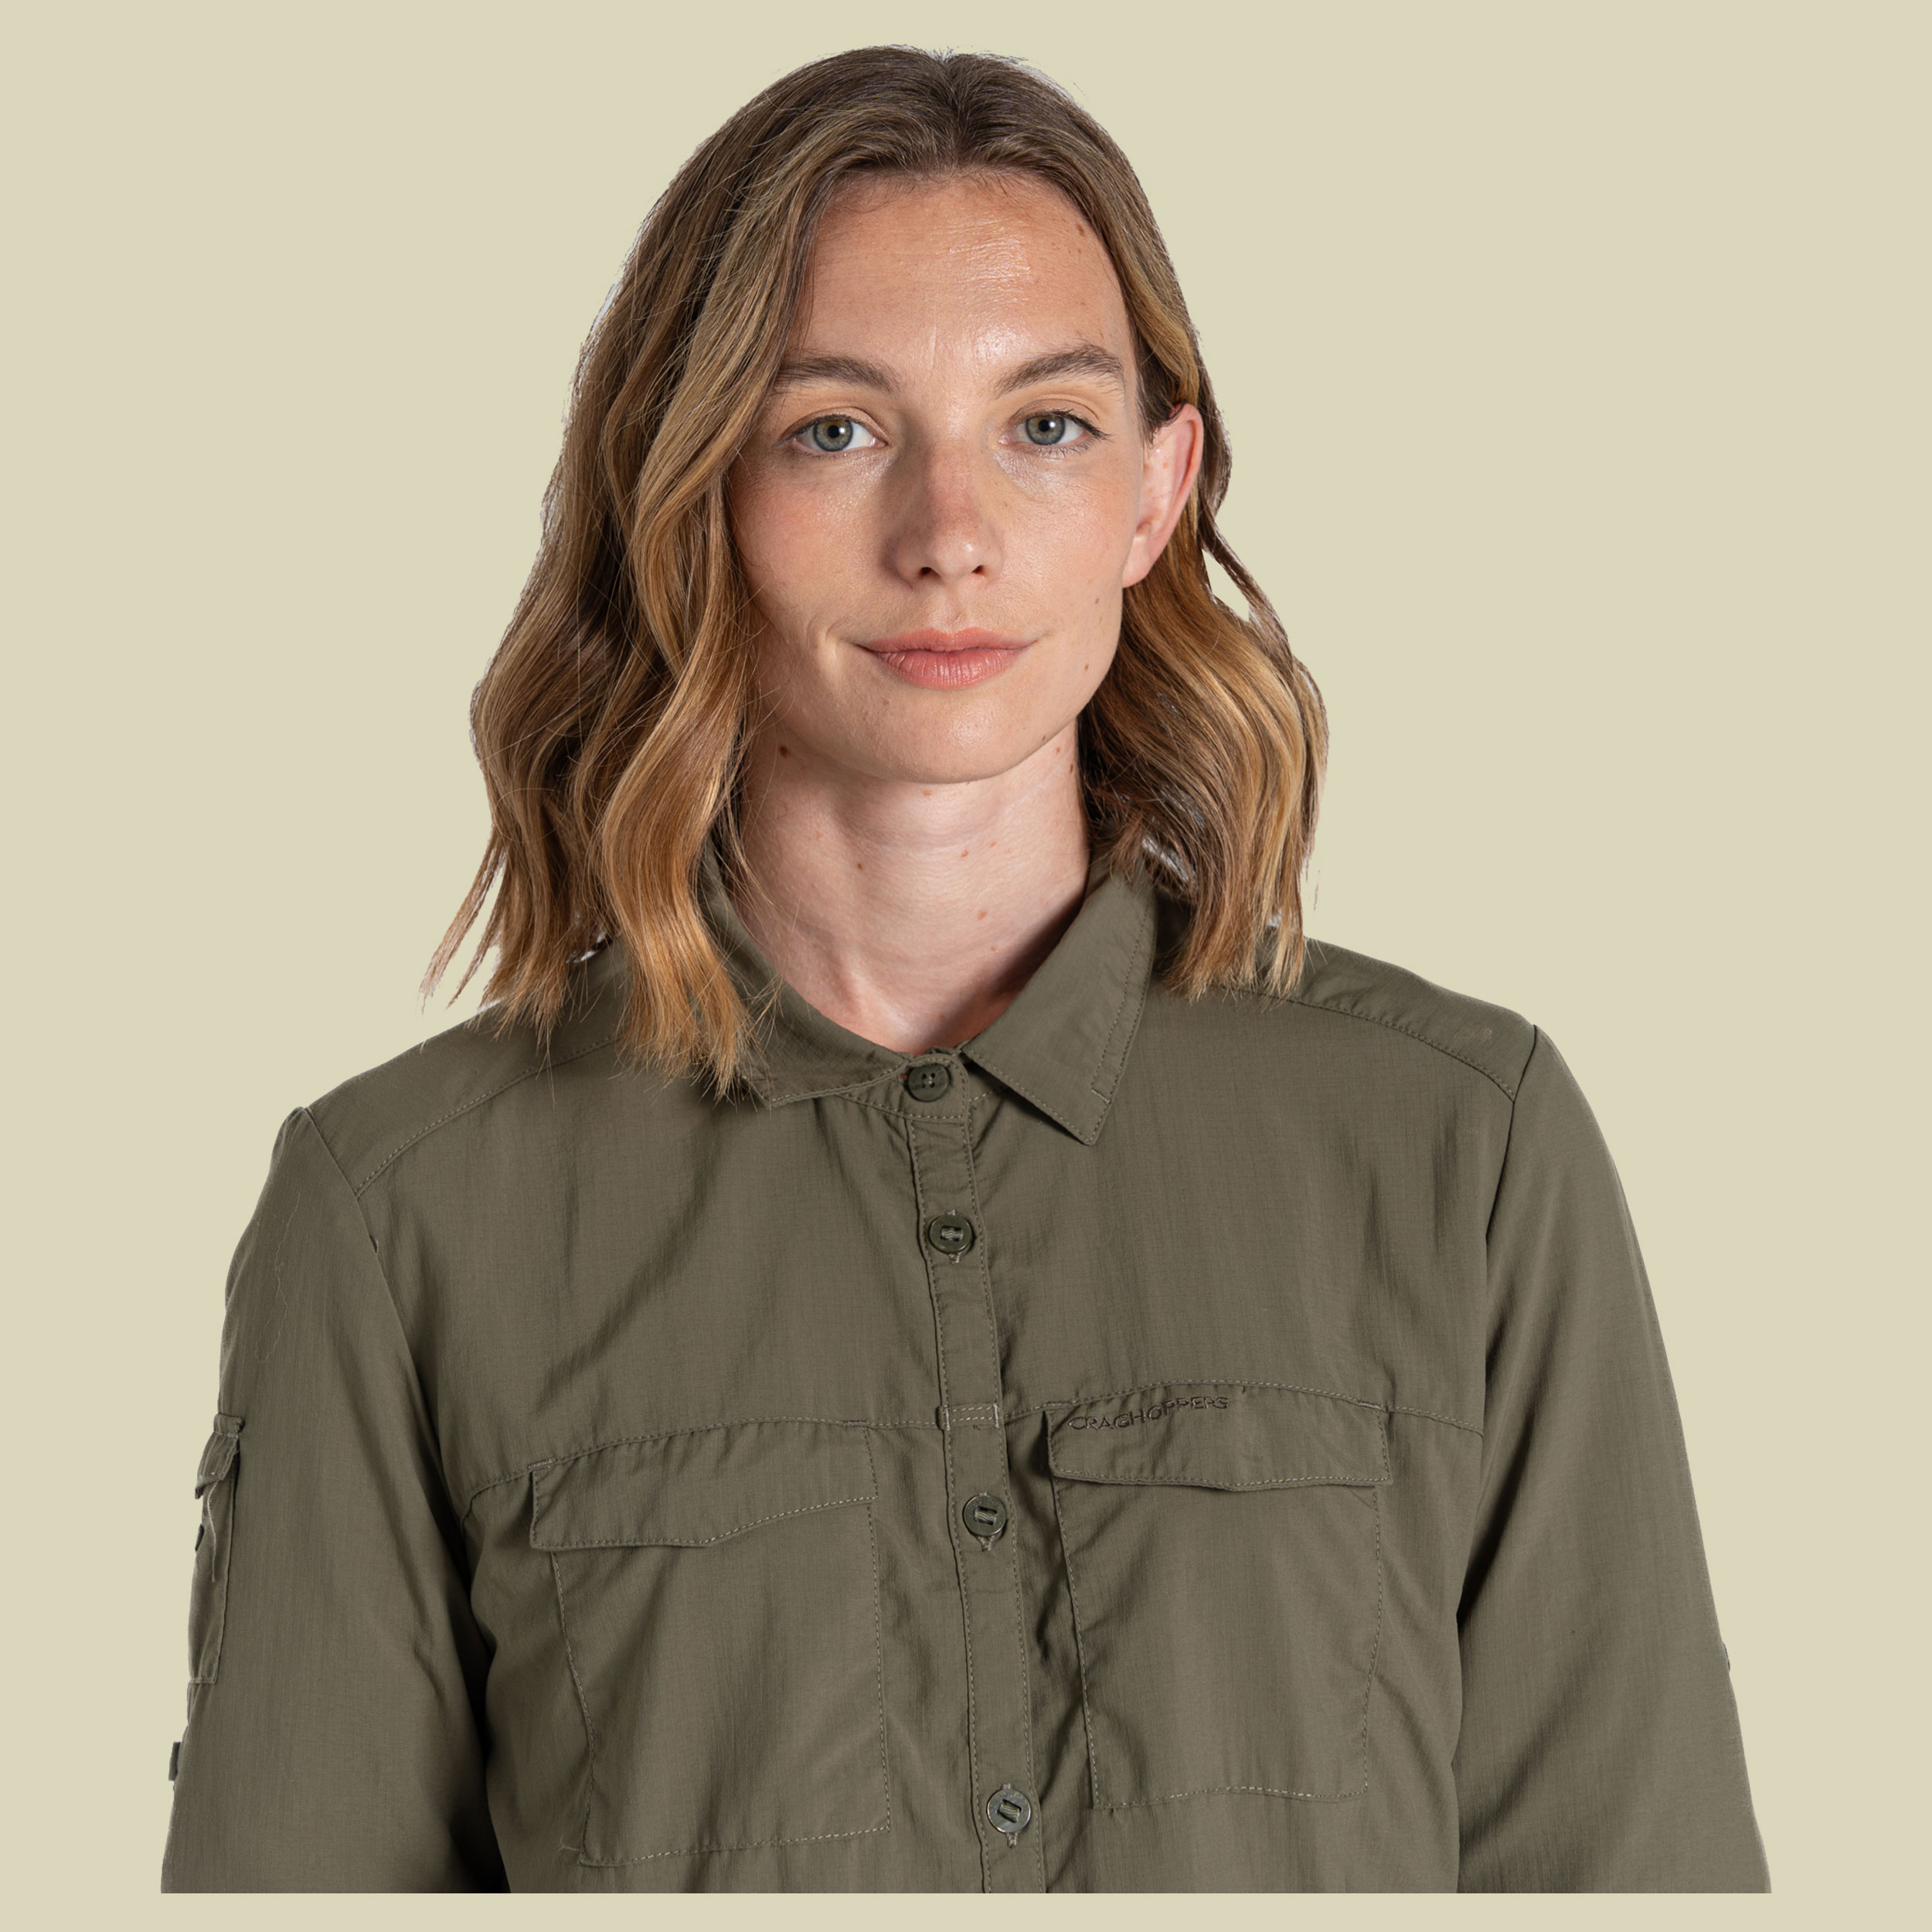 NosiLife Adventure Long Sleeved Shirt III Women 36 grün -wild olive (UK 10)